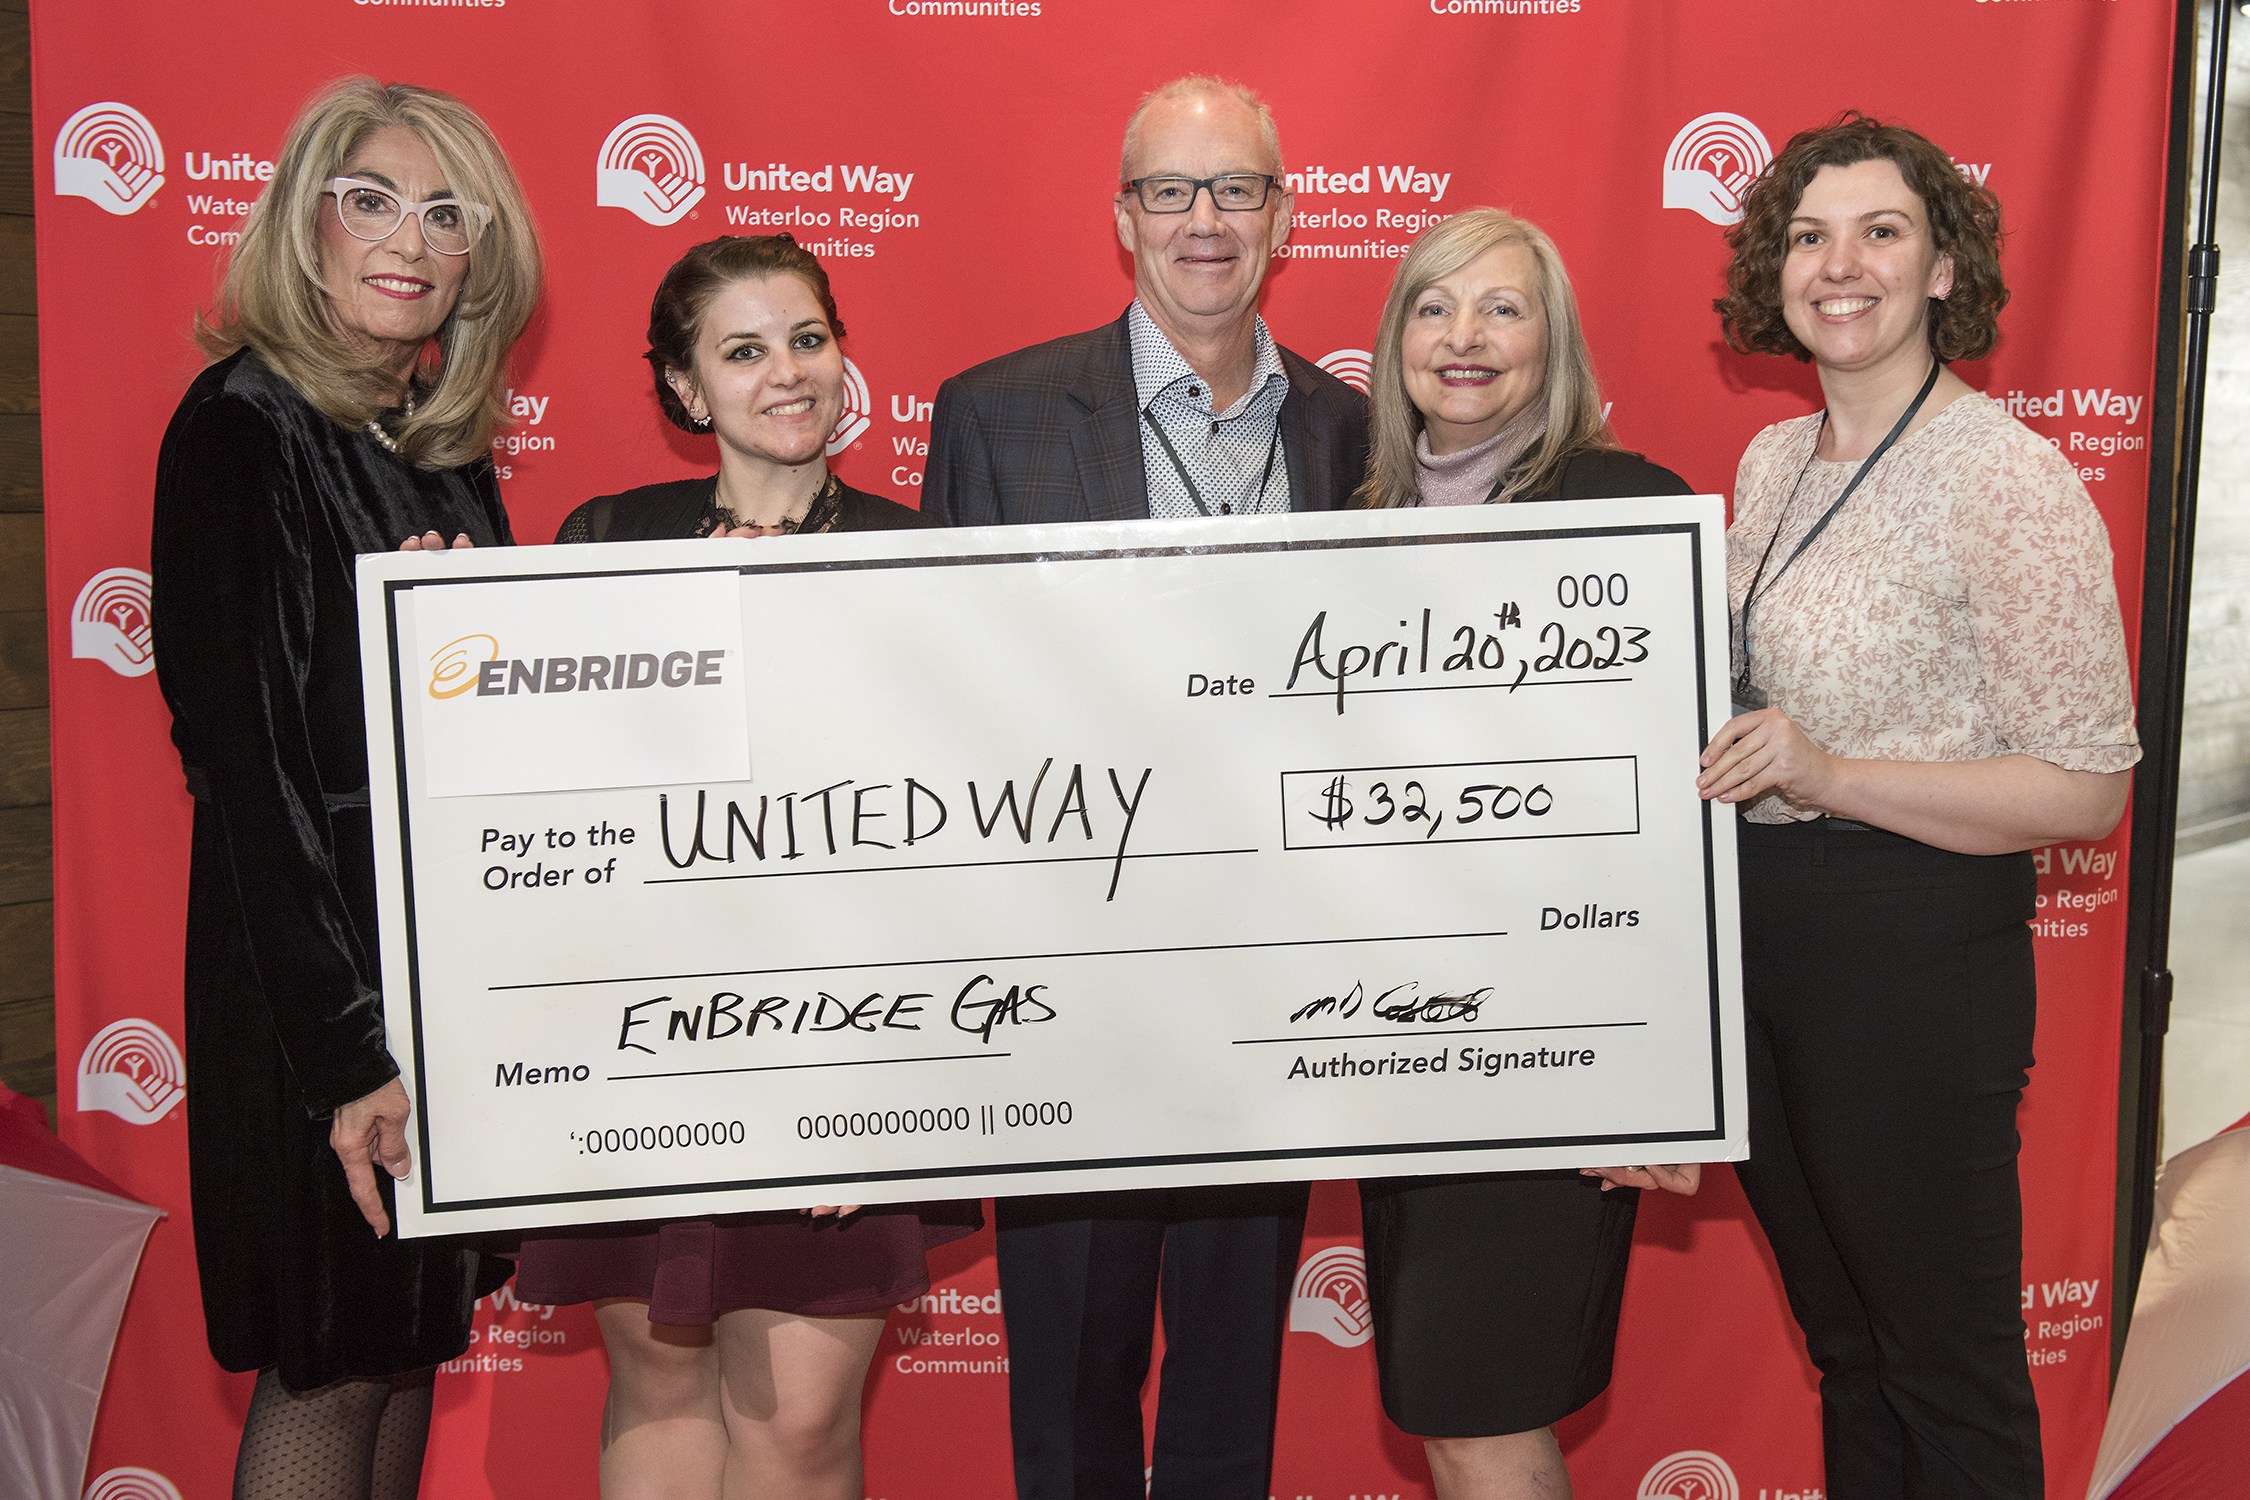 united way charity giving non-profit donation enbridge